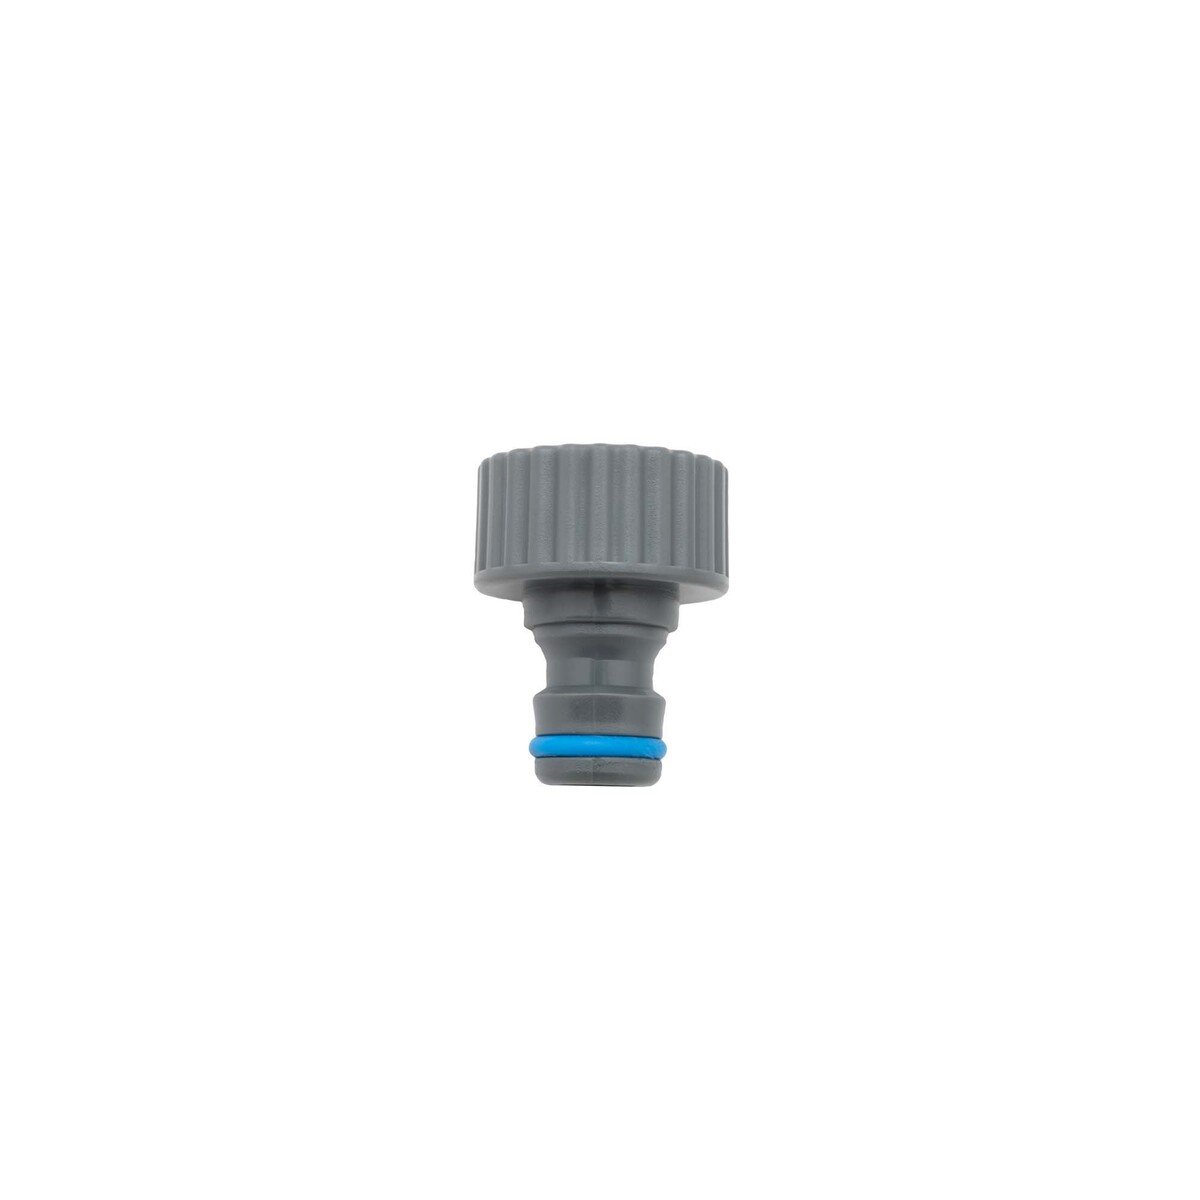 Aquacraft Male Tap Adaptor, 3/4 inches, Blue, 550160